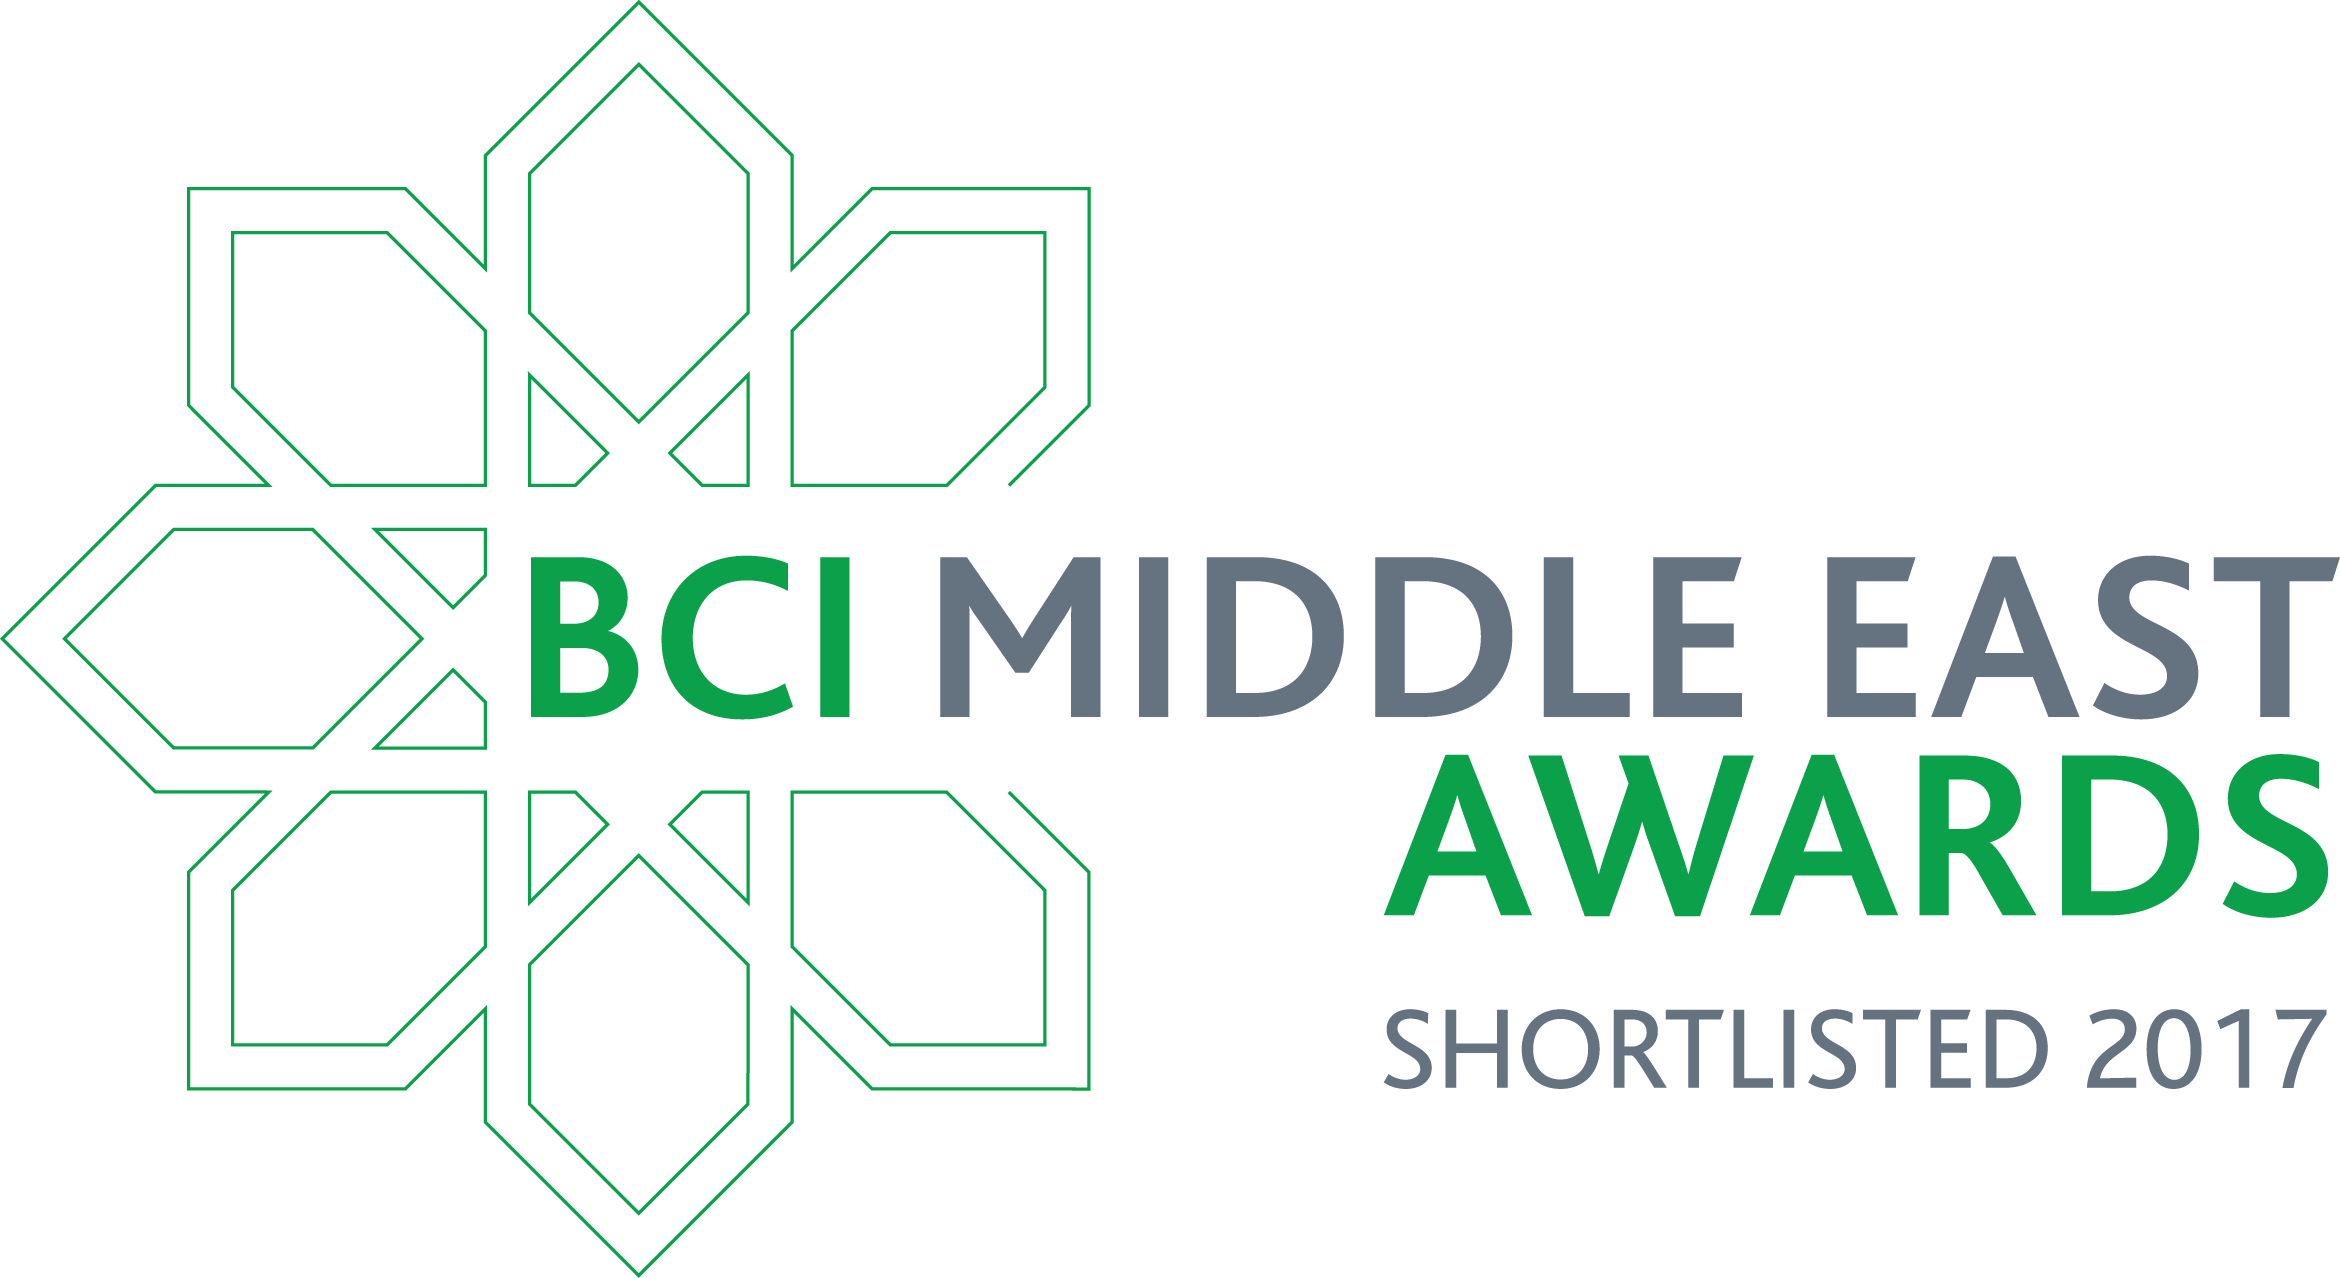 Middle East Awards_Shortlisted2017.png